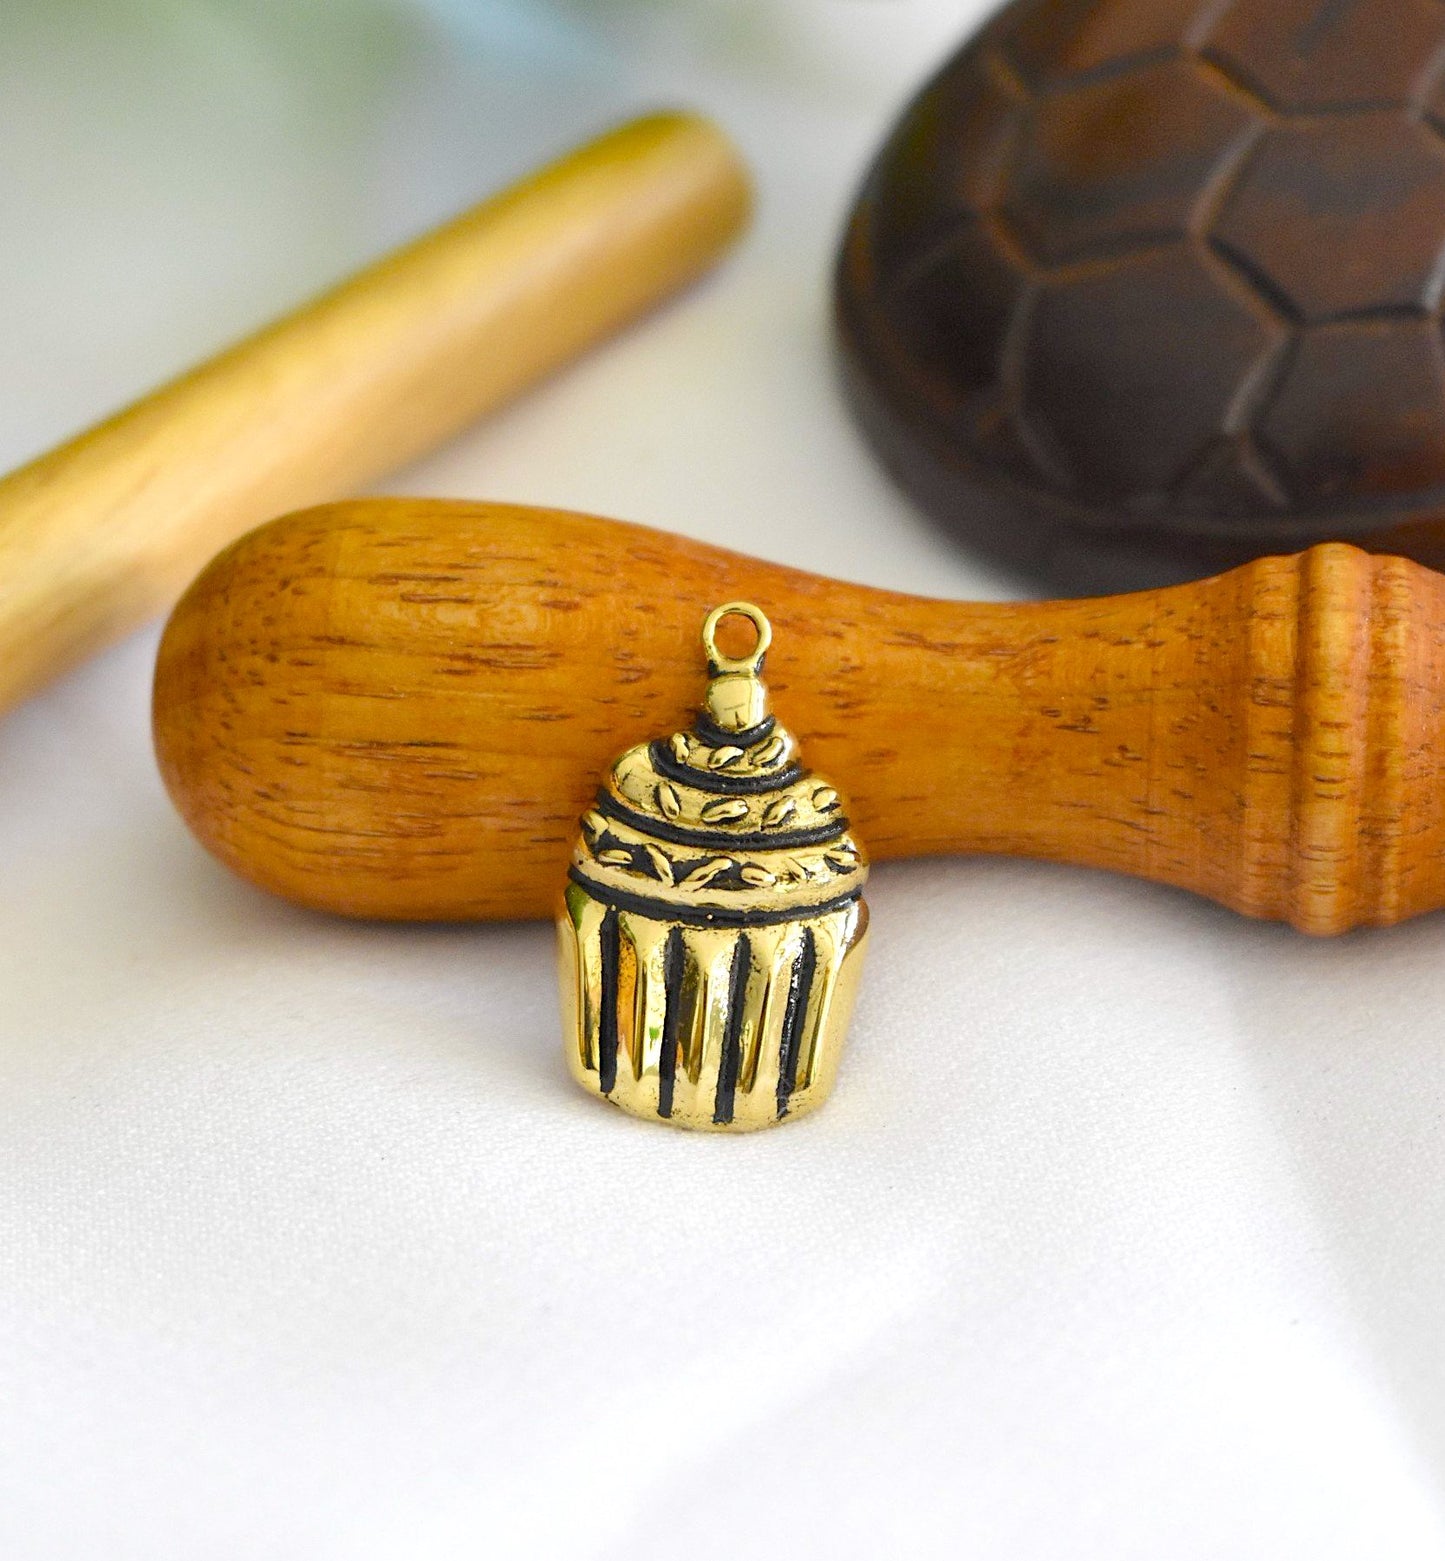 Cupcake Dessert Handmade Gold Brass Necklace Pendant Jewelry